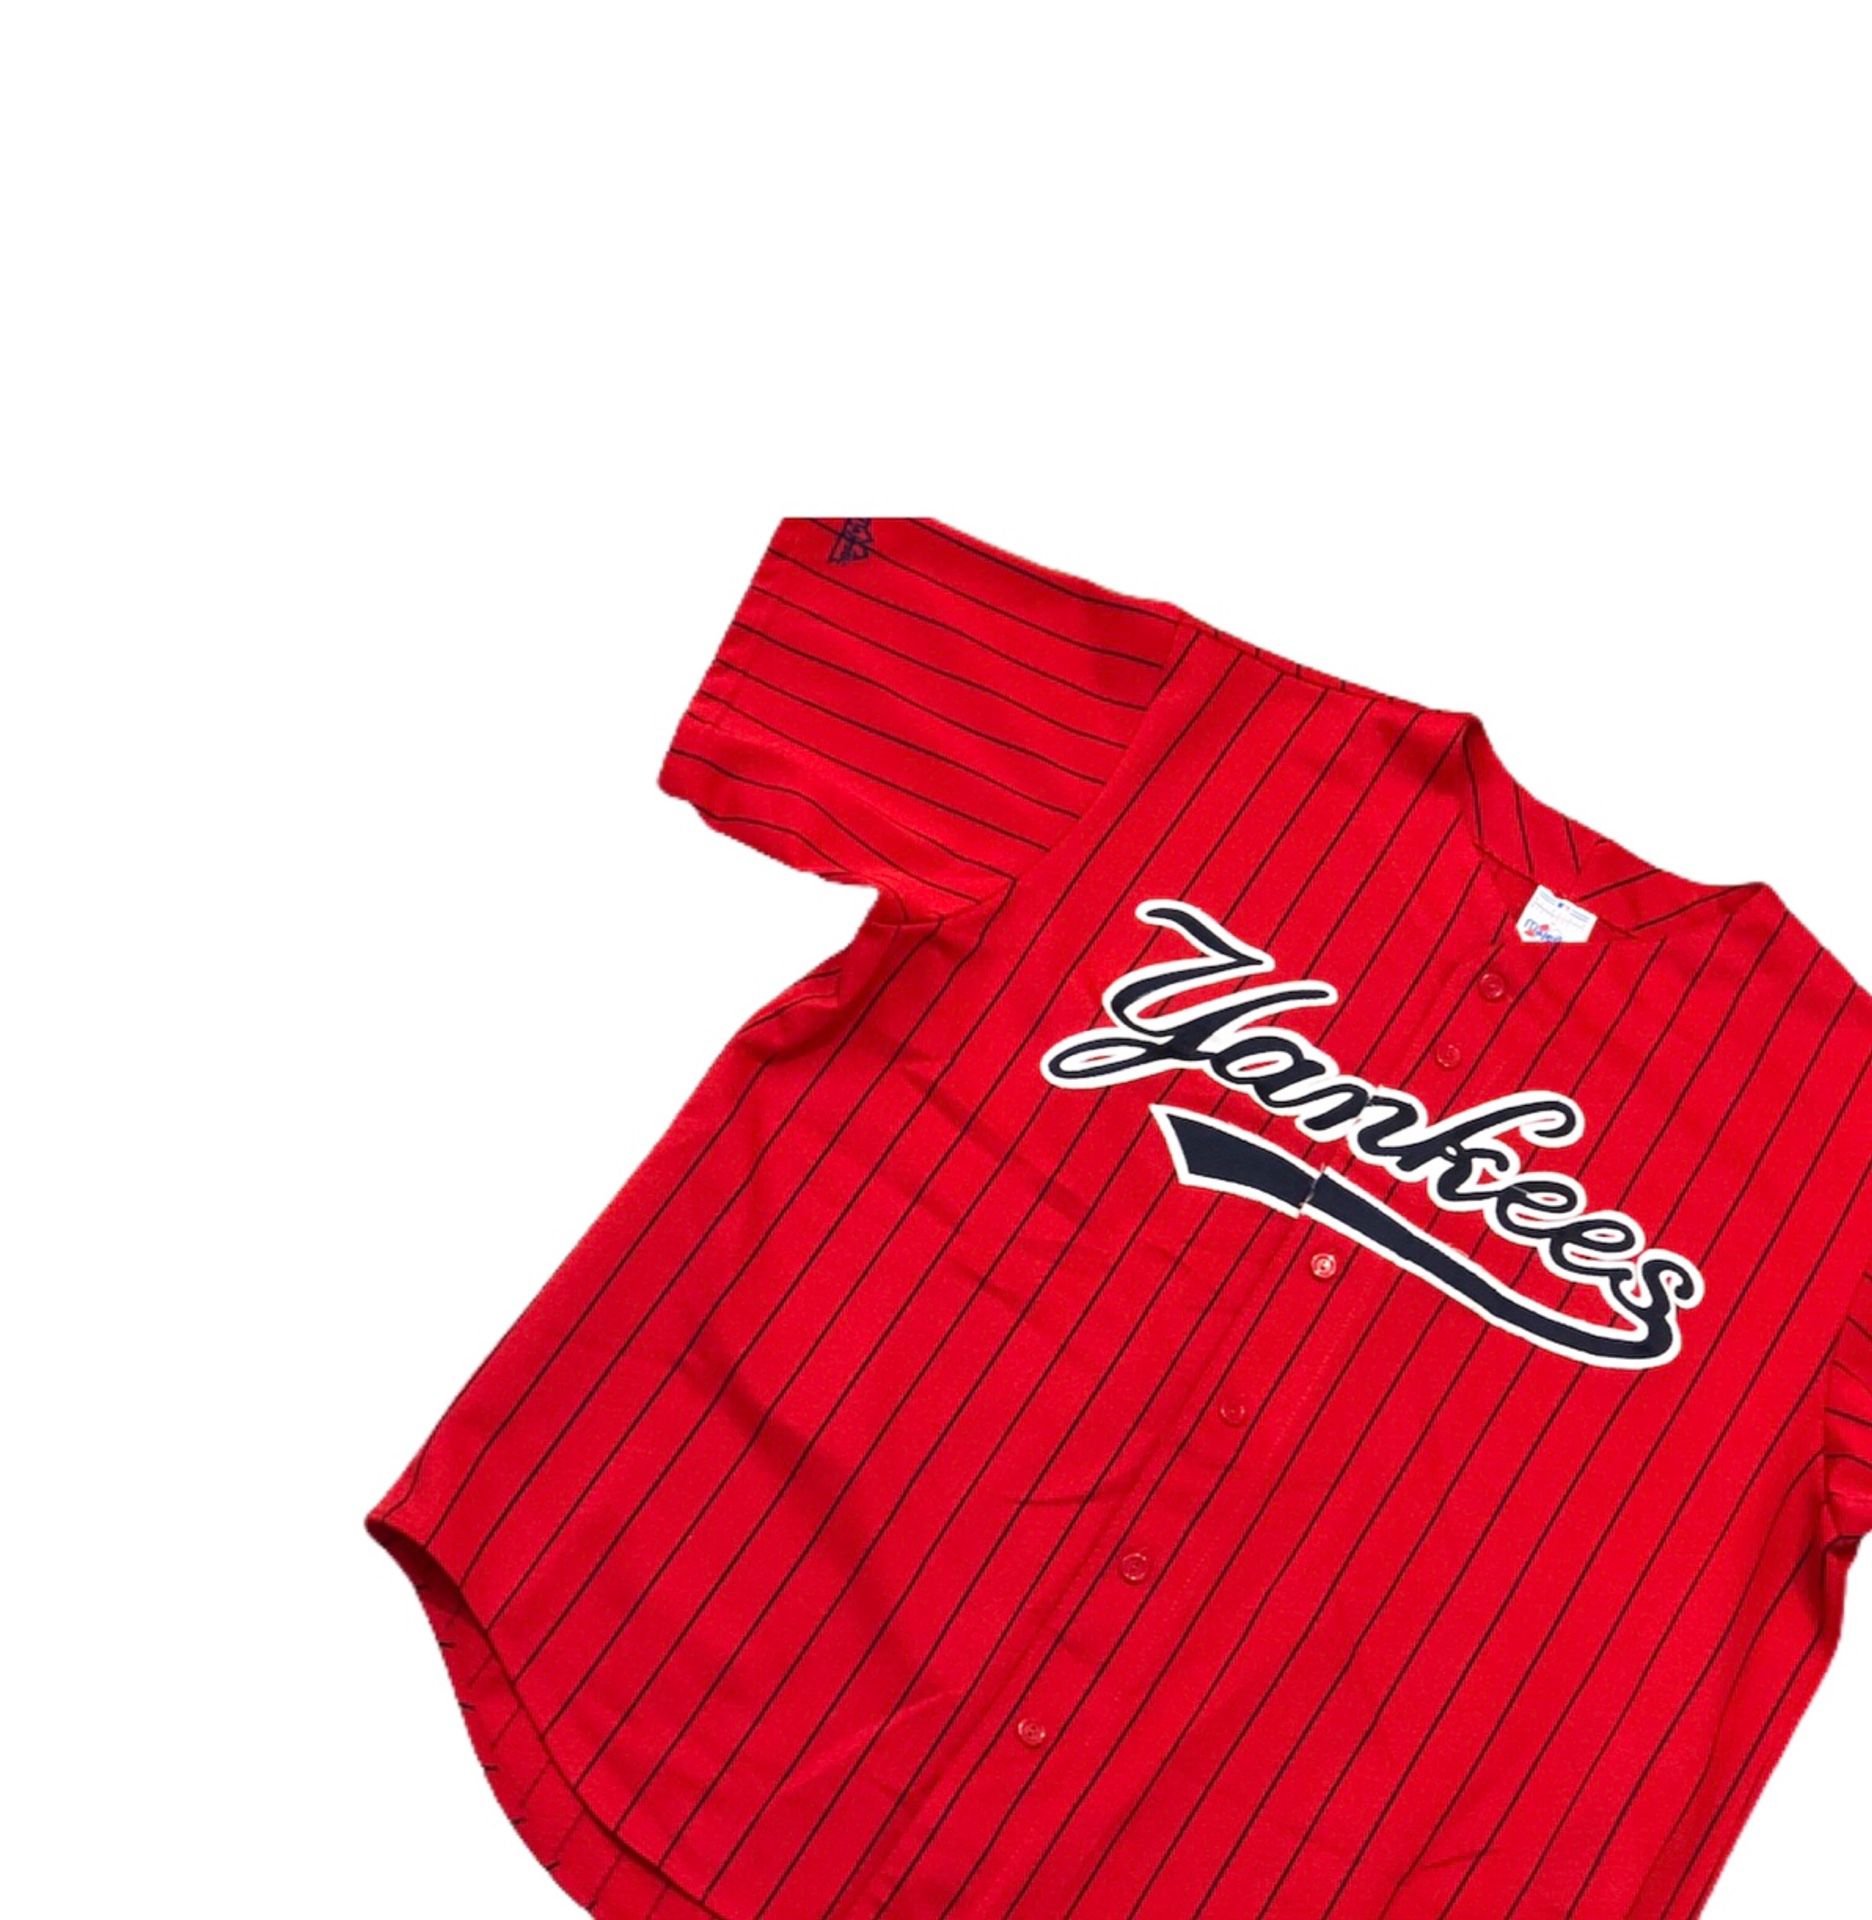 MAJESTIC NEW YORK YANKEES MLB BASEBALL JERSEY SZ: XL – Stay Alive vintage  store